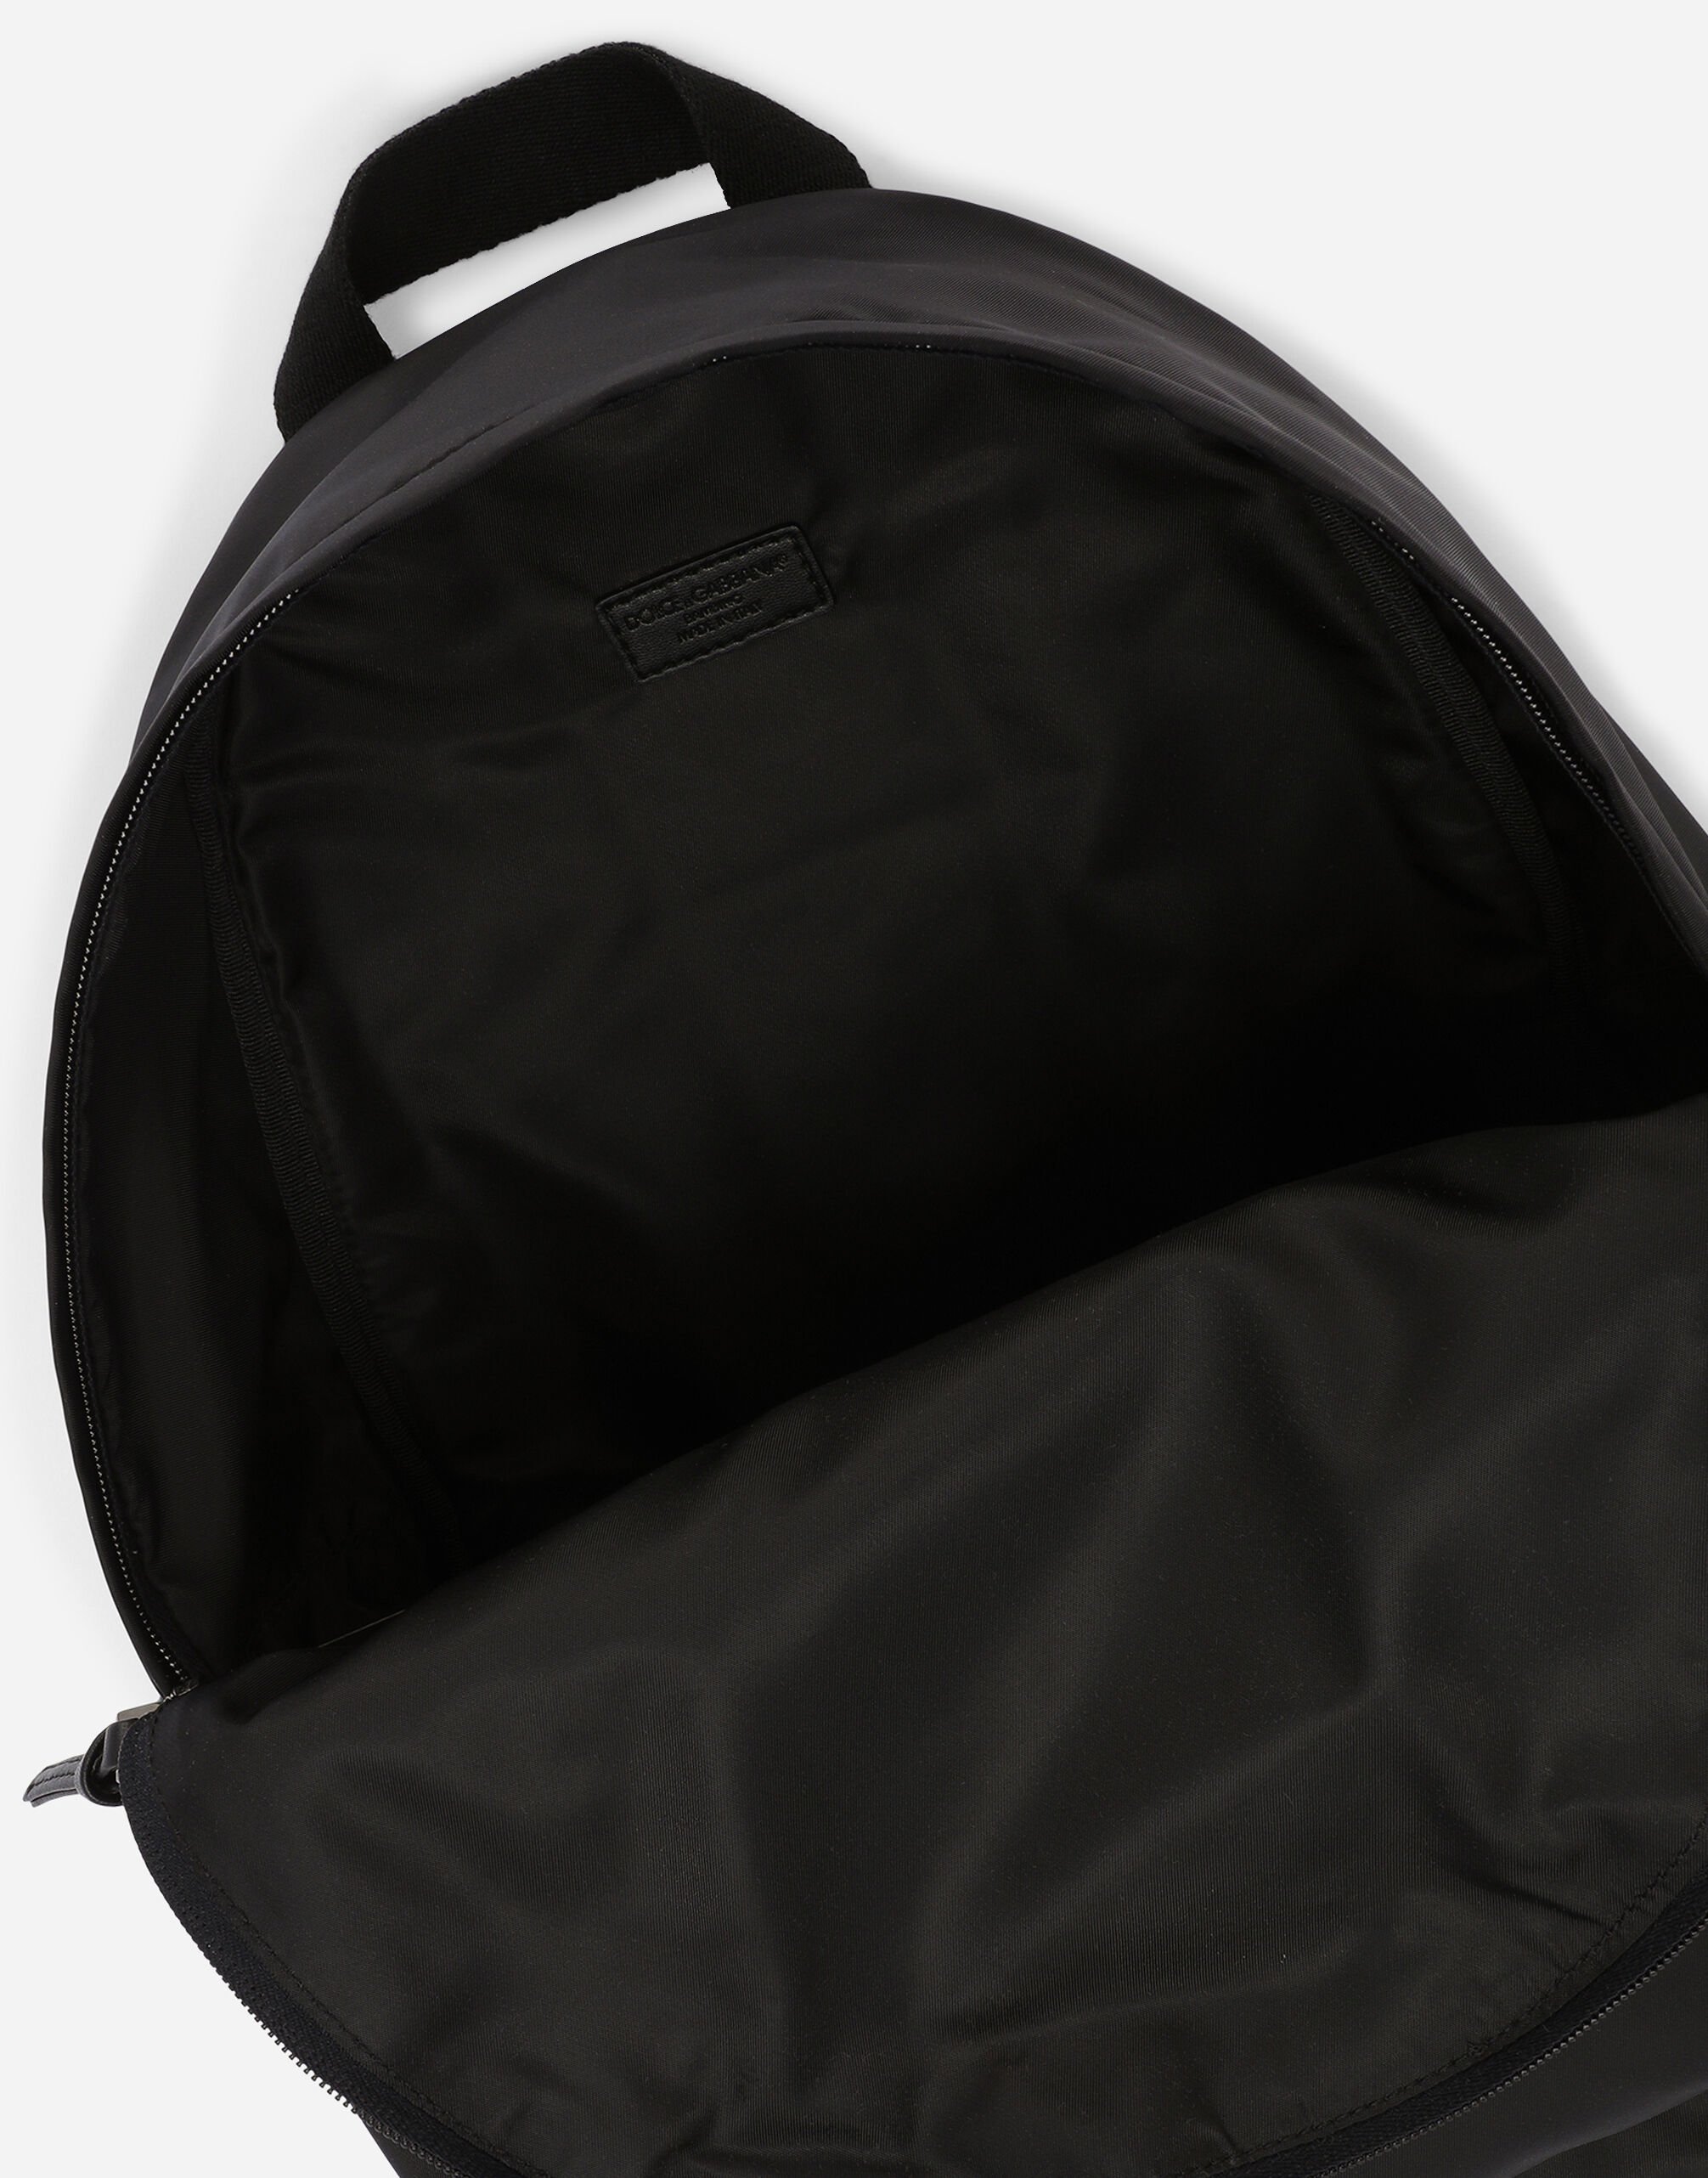 Nylon backpack with Dolce&Gabbana Milano print